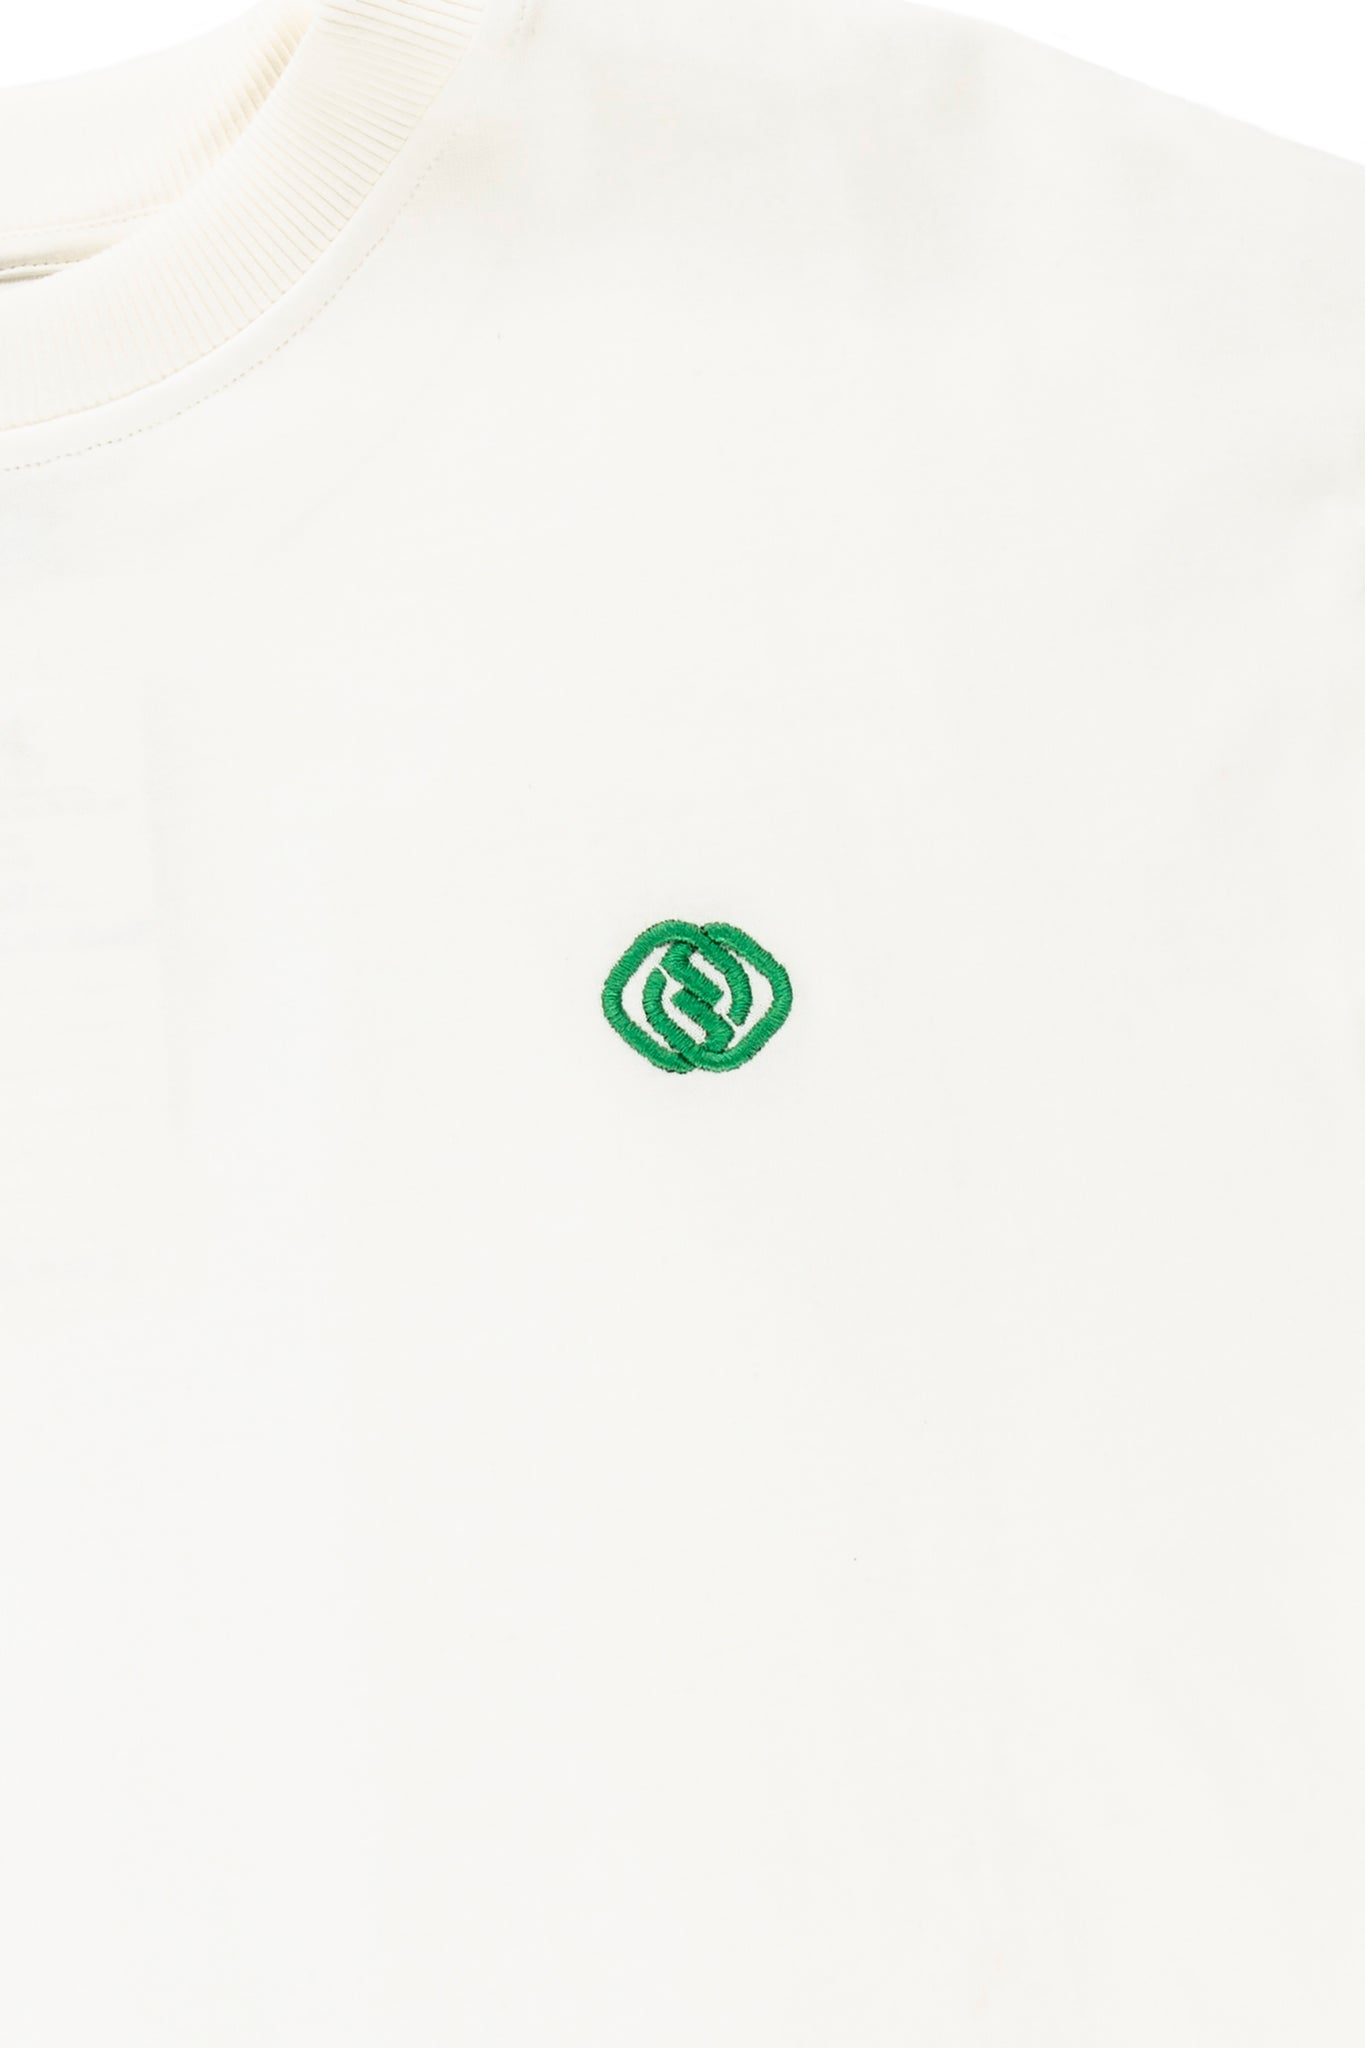 Logo detail on mens heavyweight t-shirt